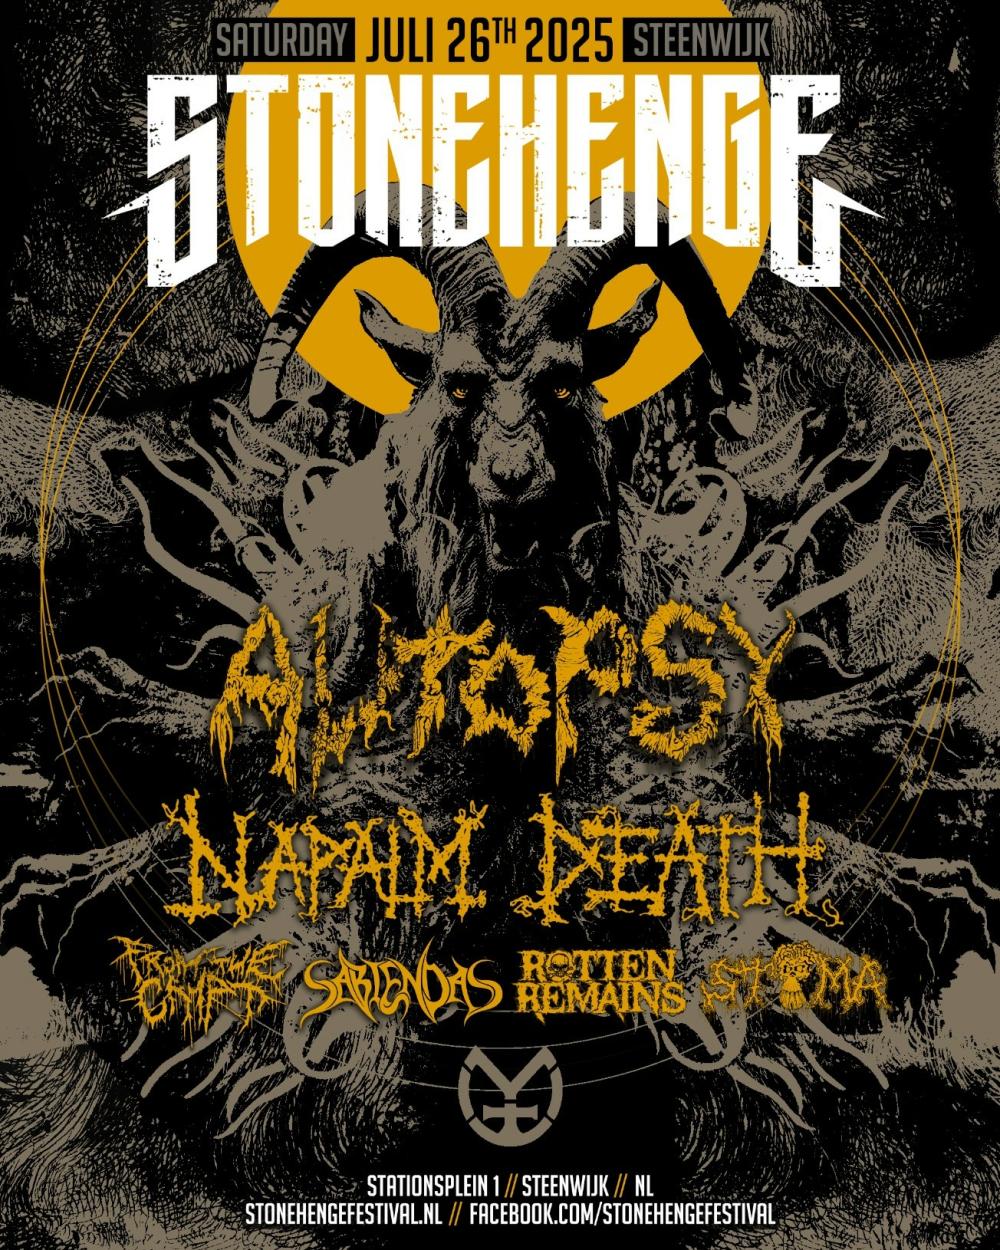 Autopsy en Napalm Death op Stonehenge festival